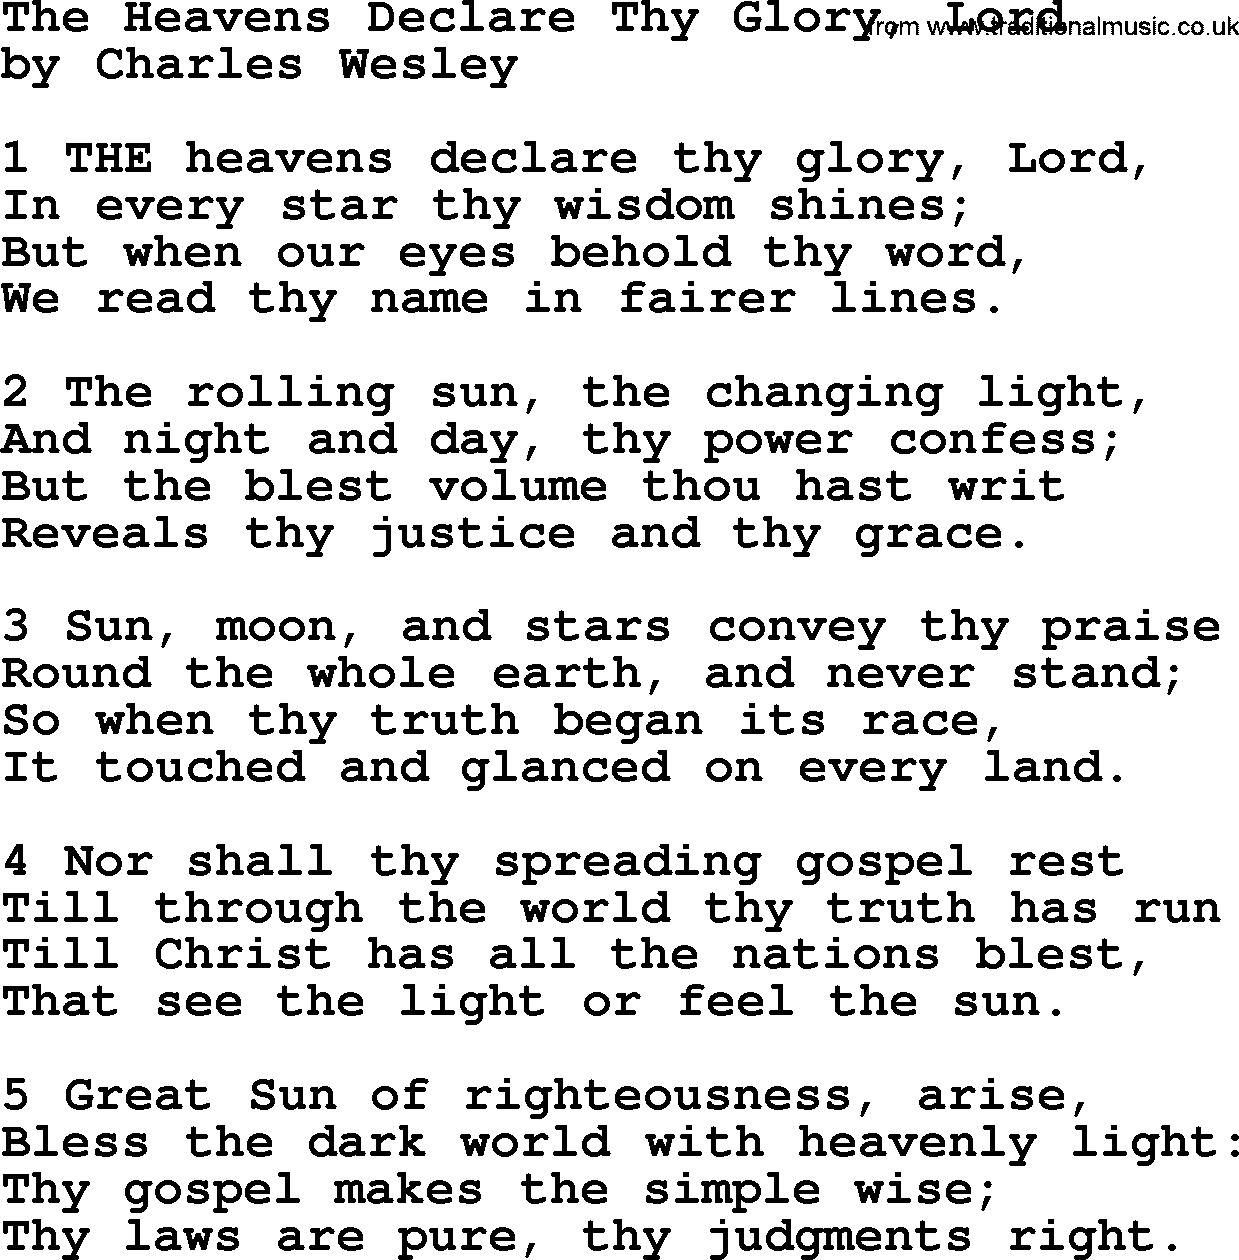 Charles Wesley hymn: The Heavens Declare Thy Glory, Lord, lyrics